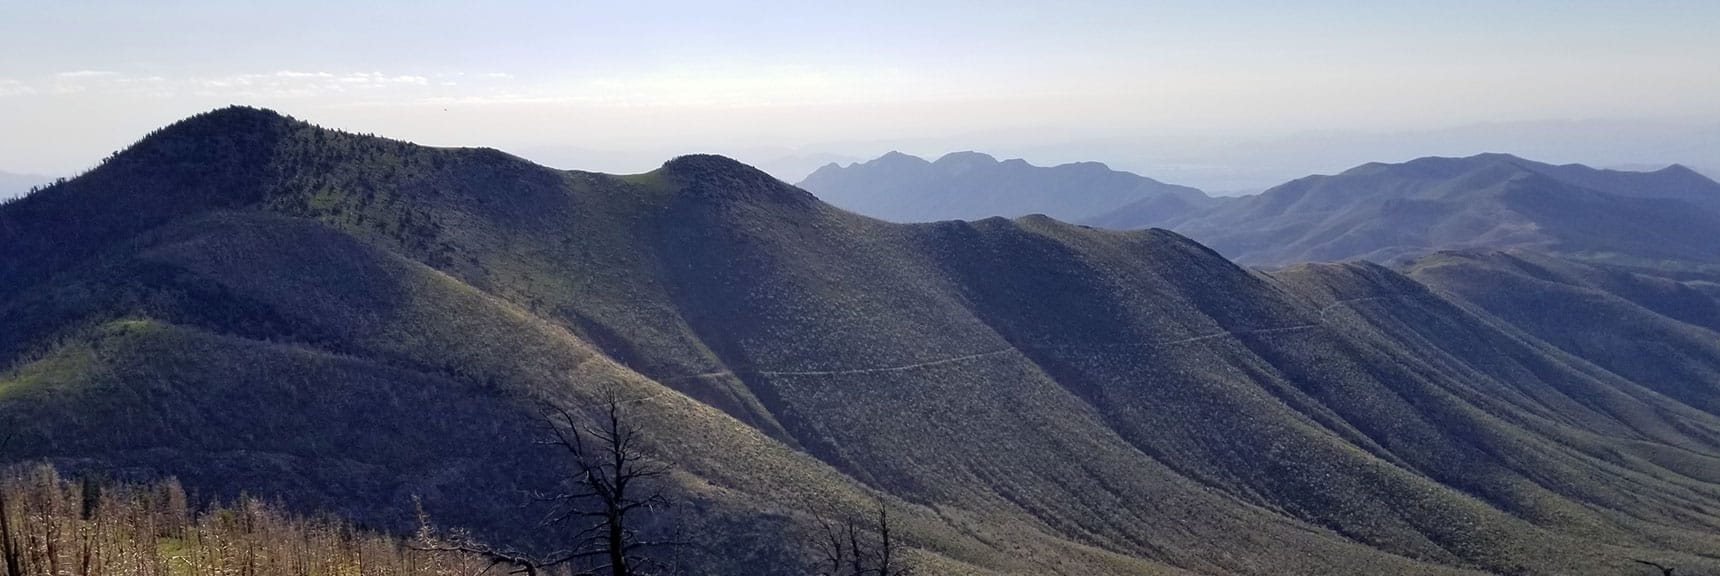 Harris Mountain, Ridge and Main Trail from Harris Springs Rd.